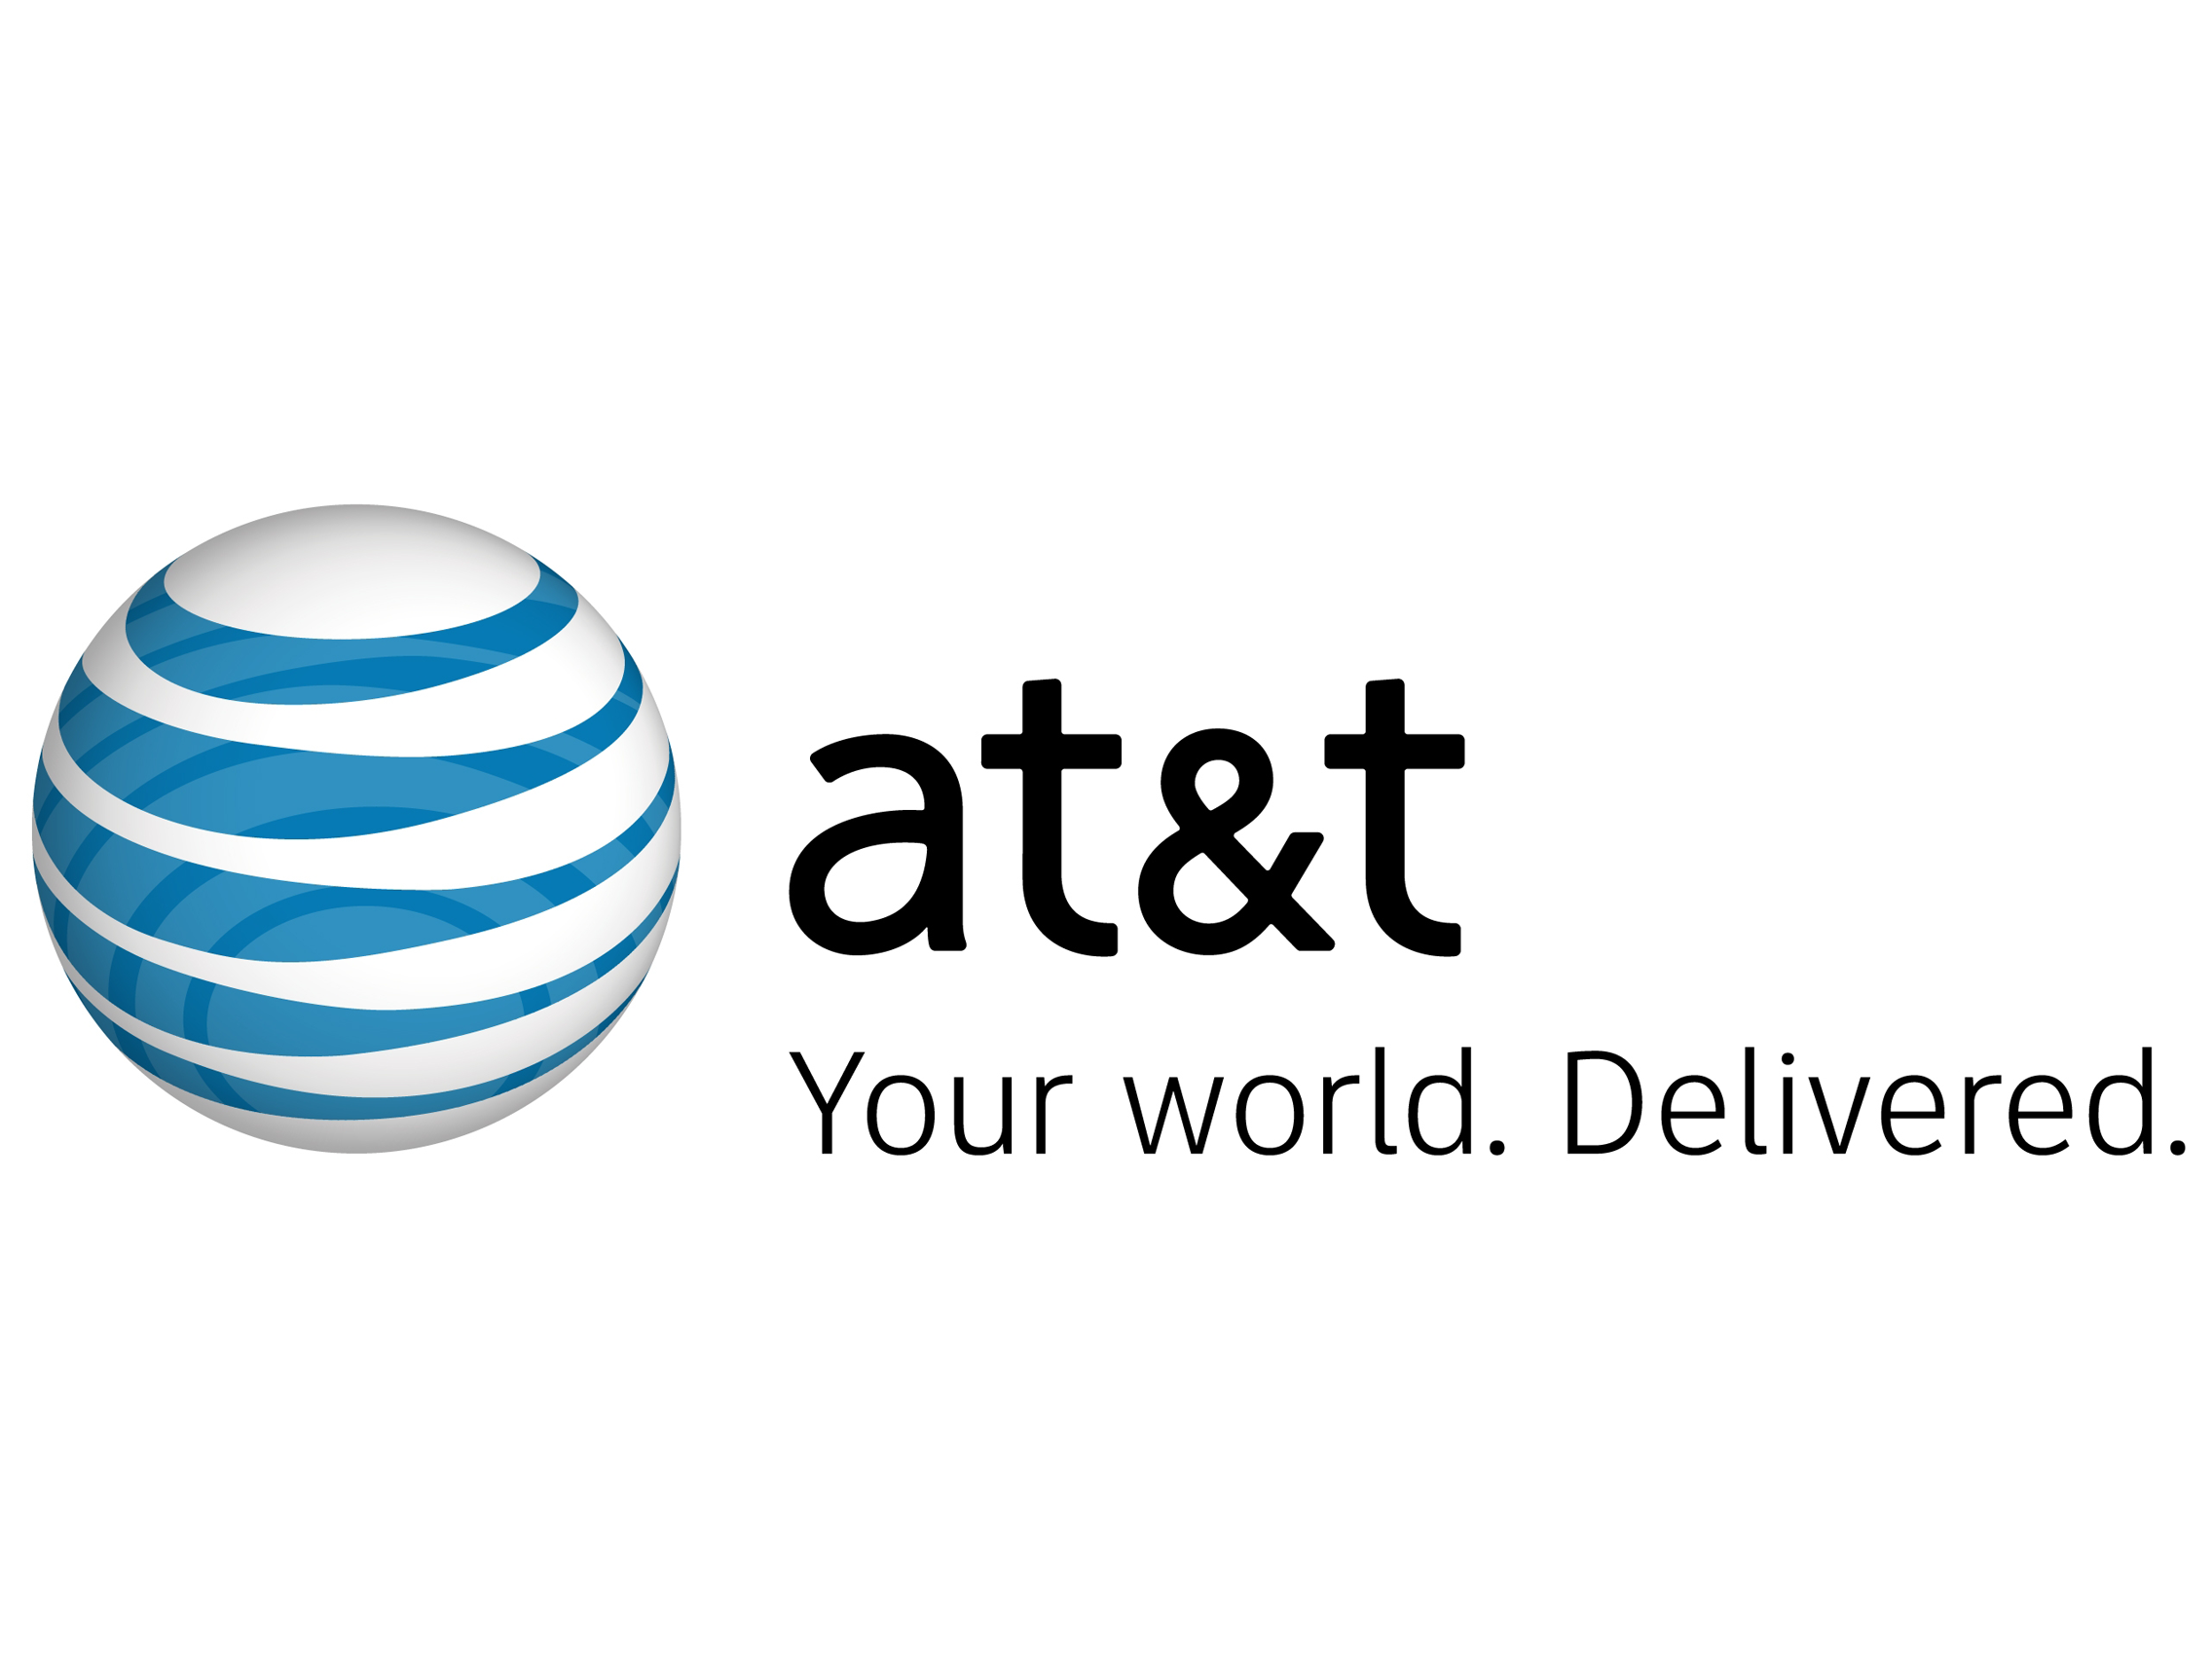 ATT-logo-and-slogan.png